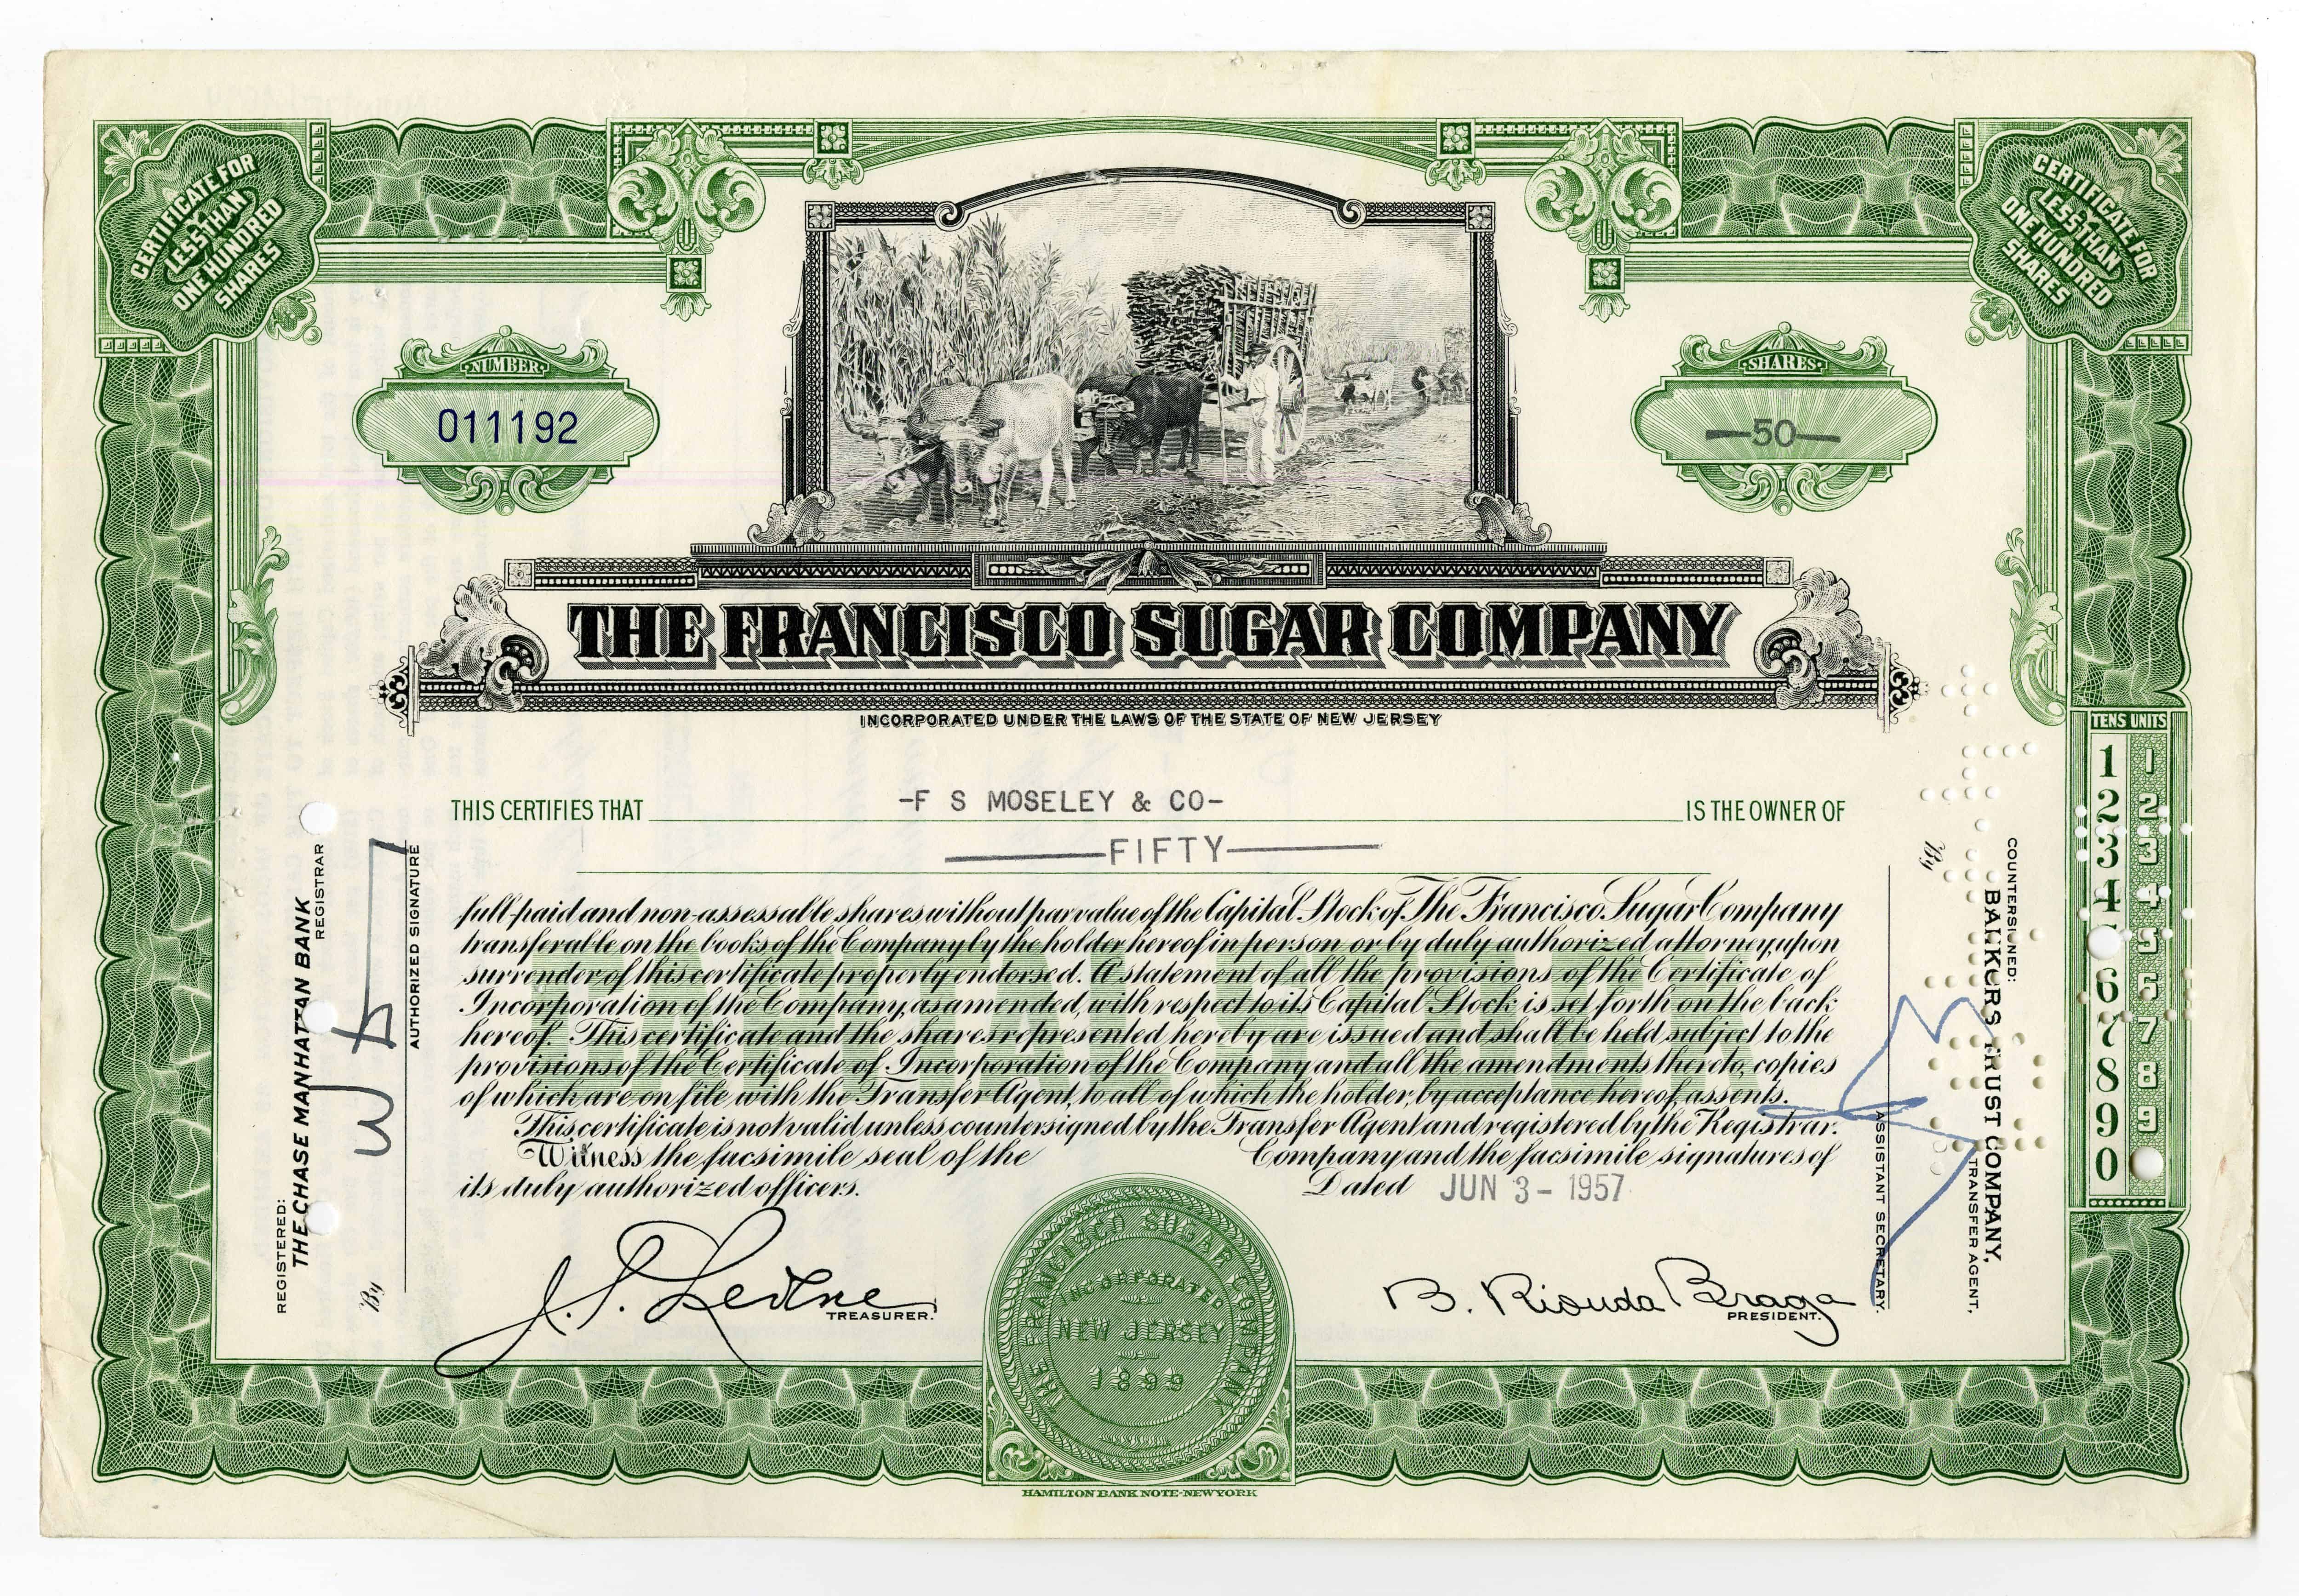 50 akcji spółki The Francisco Sugar Company z dnia 3 czerwca 1957 roku